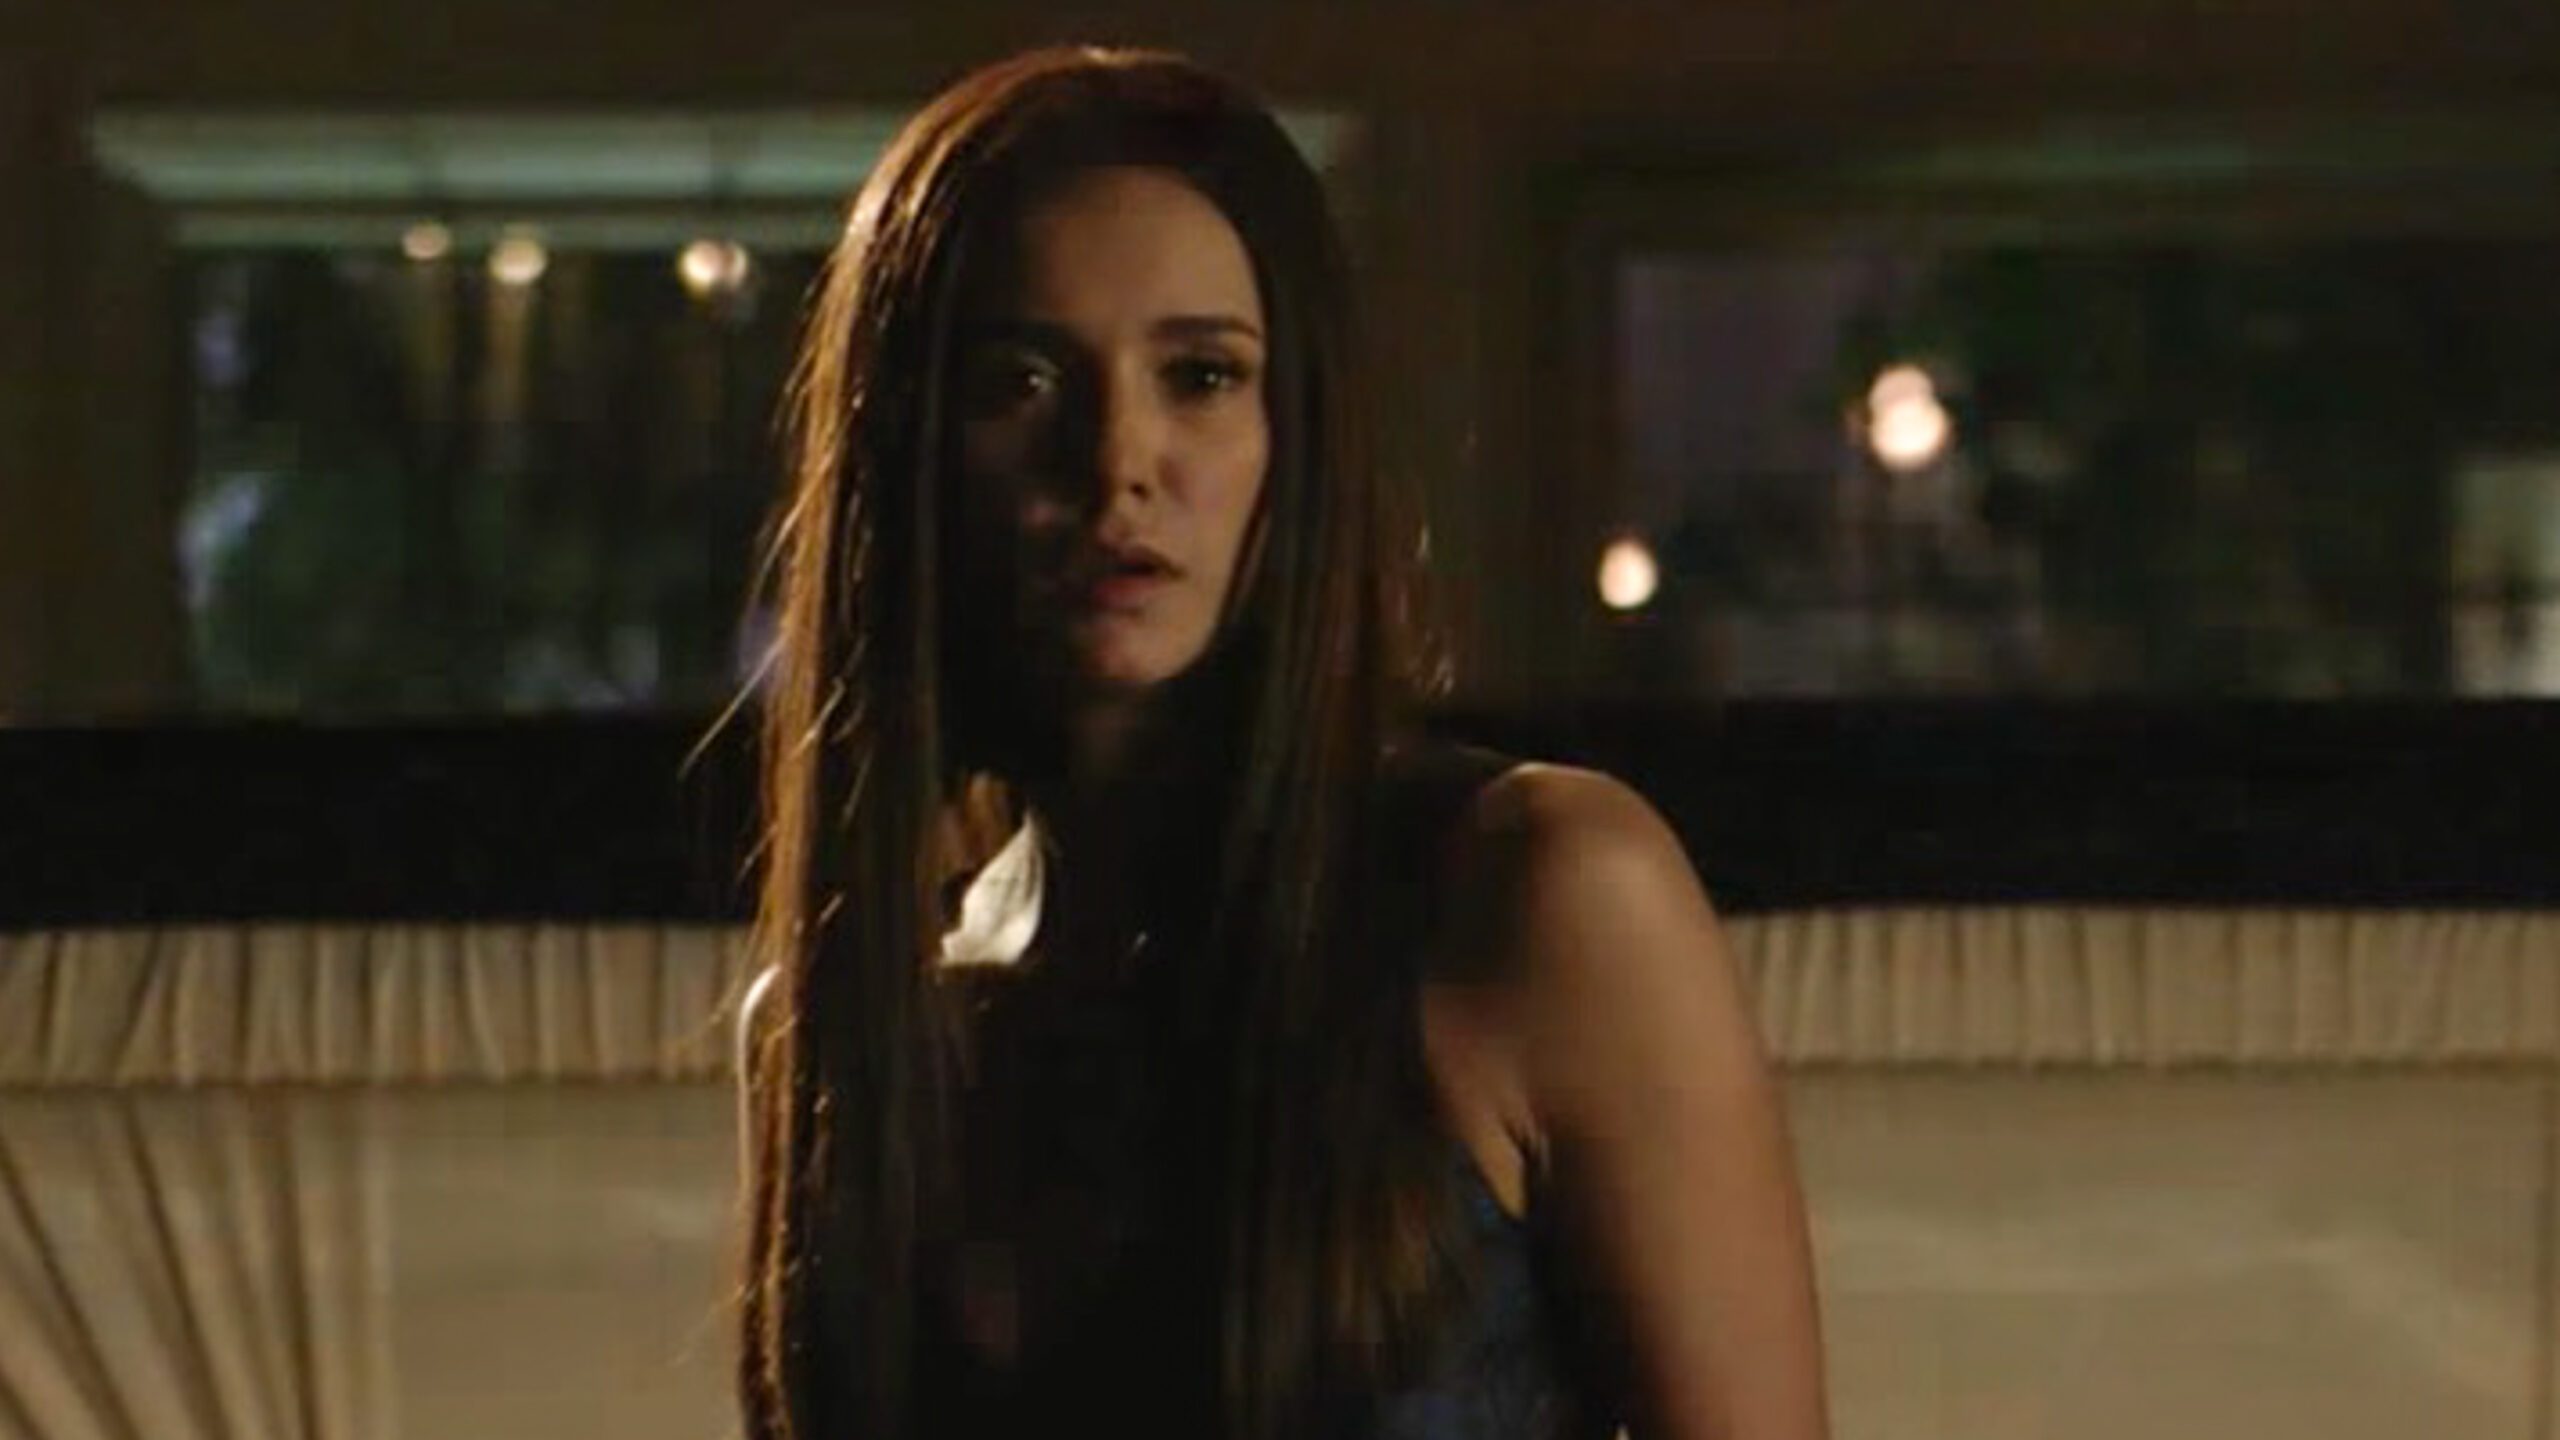 WATCH: Elena, Damon reunite in ‘Vampire Diaries’ finale teaser